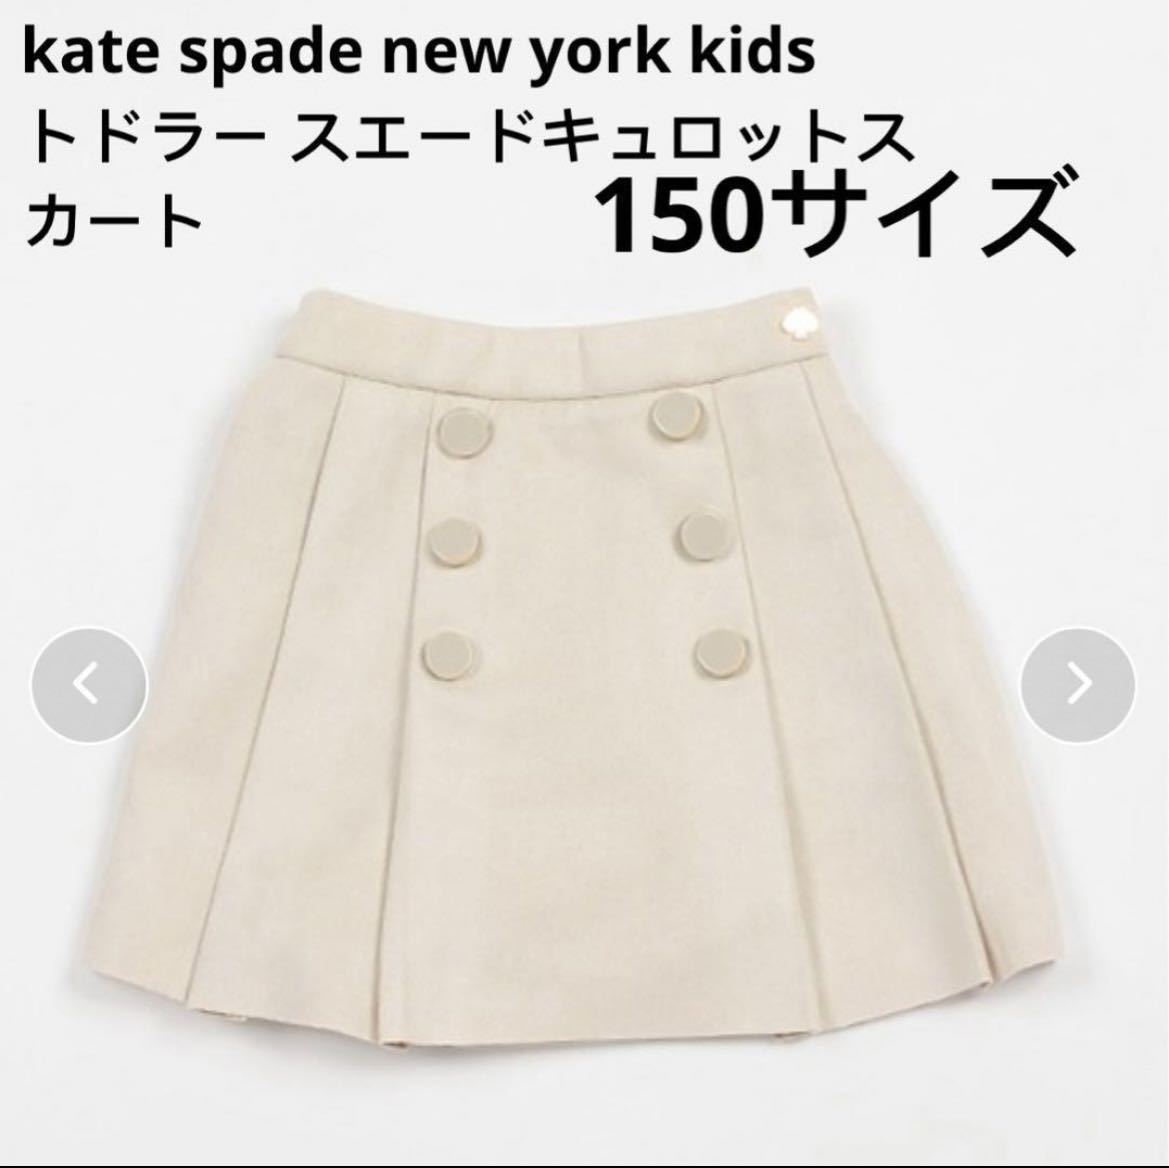 KATE SPADE NEW YORK ケイト・スペード ニューヨーク キッズ フェイク